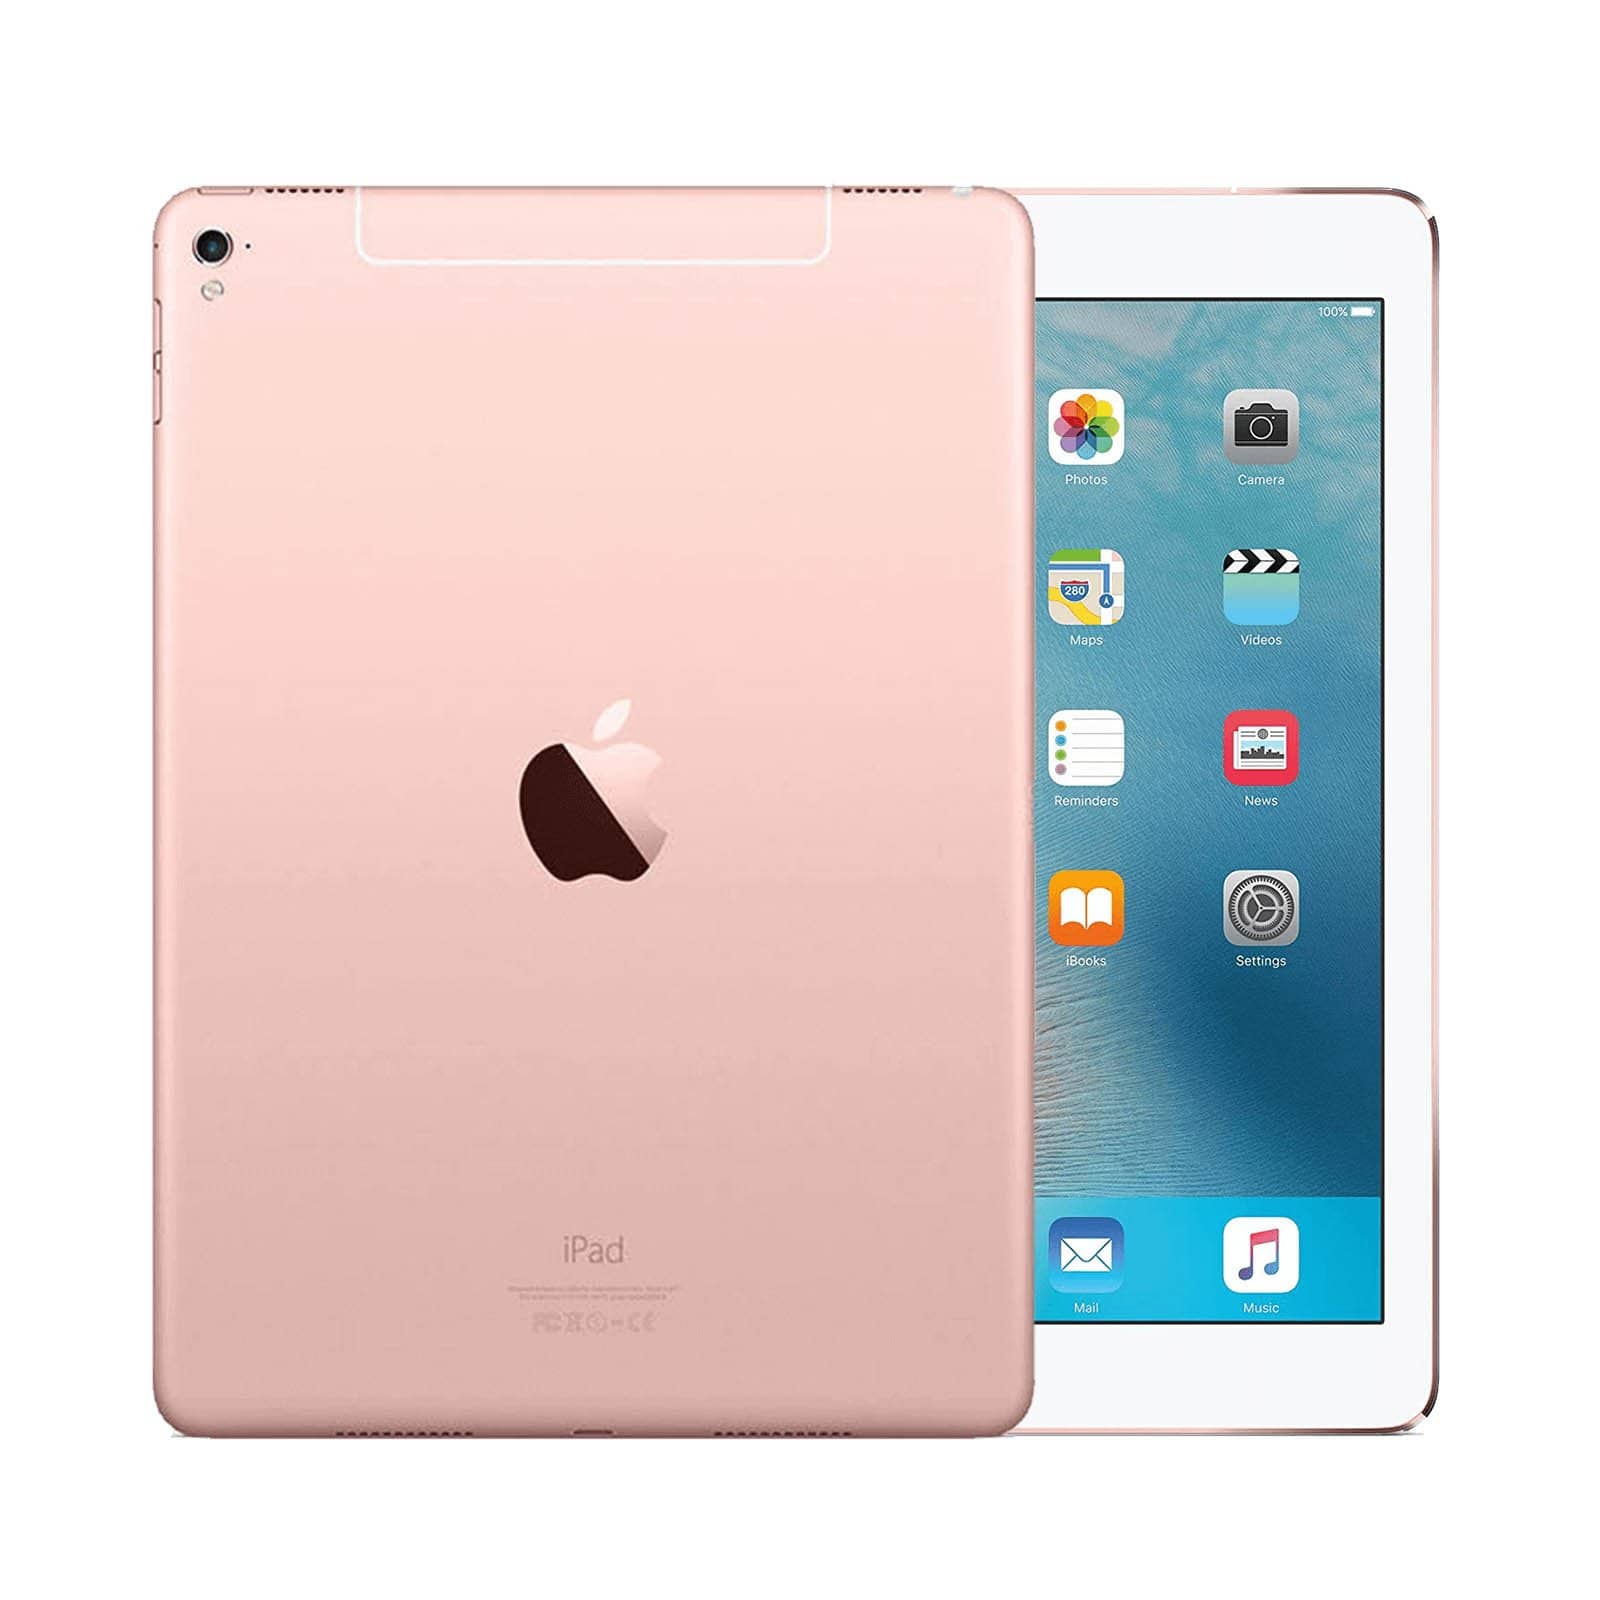 iPad Pro 9.7 Inch 32GB Rose Gold Very Good - Unlocked 32GB Rose Gold Very Good